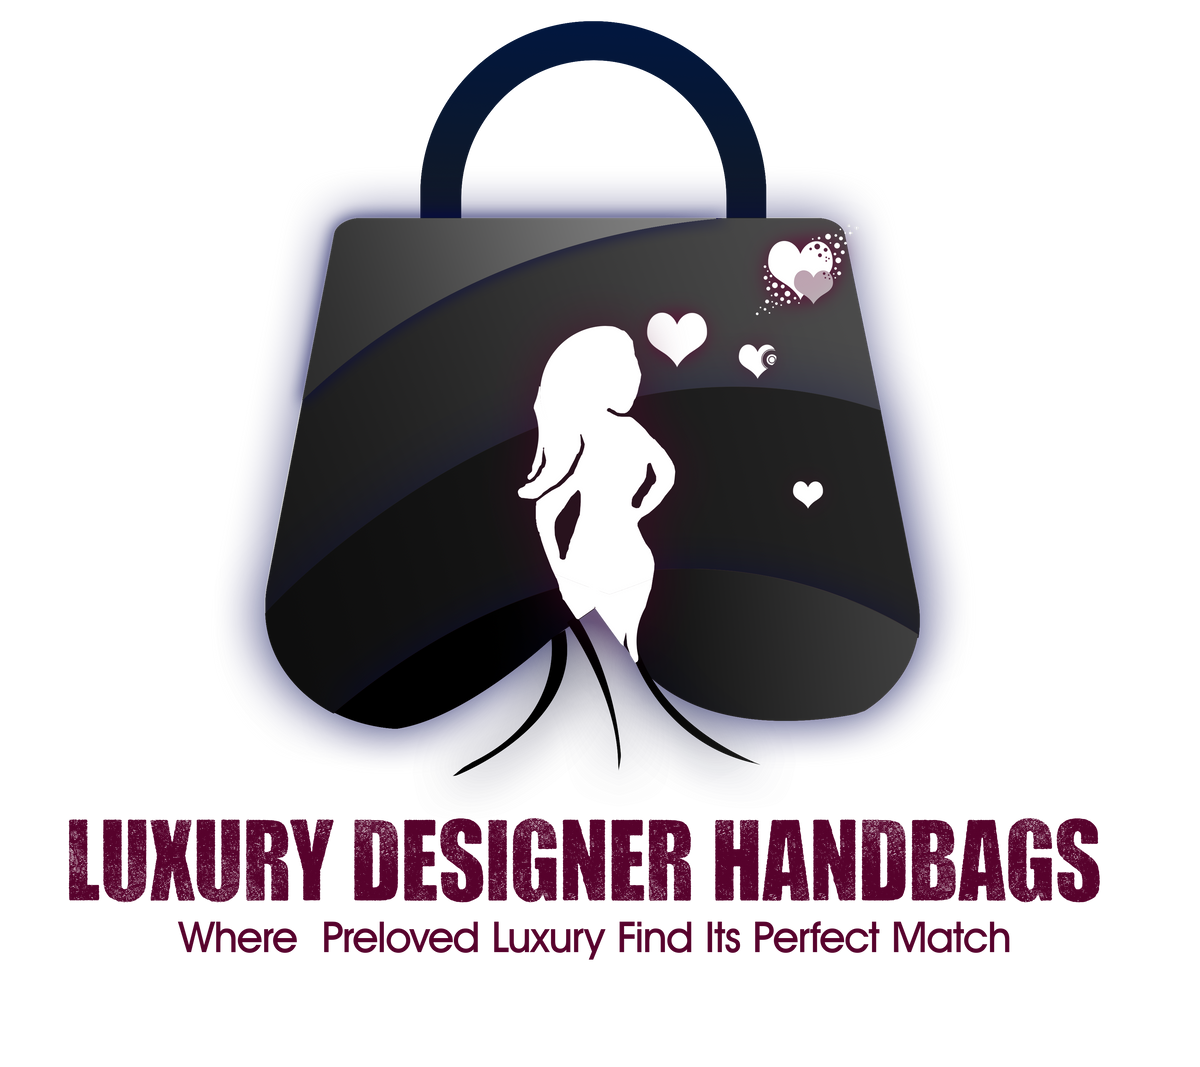 Luxury Designer Handbags - Best Quality Designer Handbags for Women
– Luxury DesignerHandbags